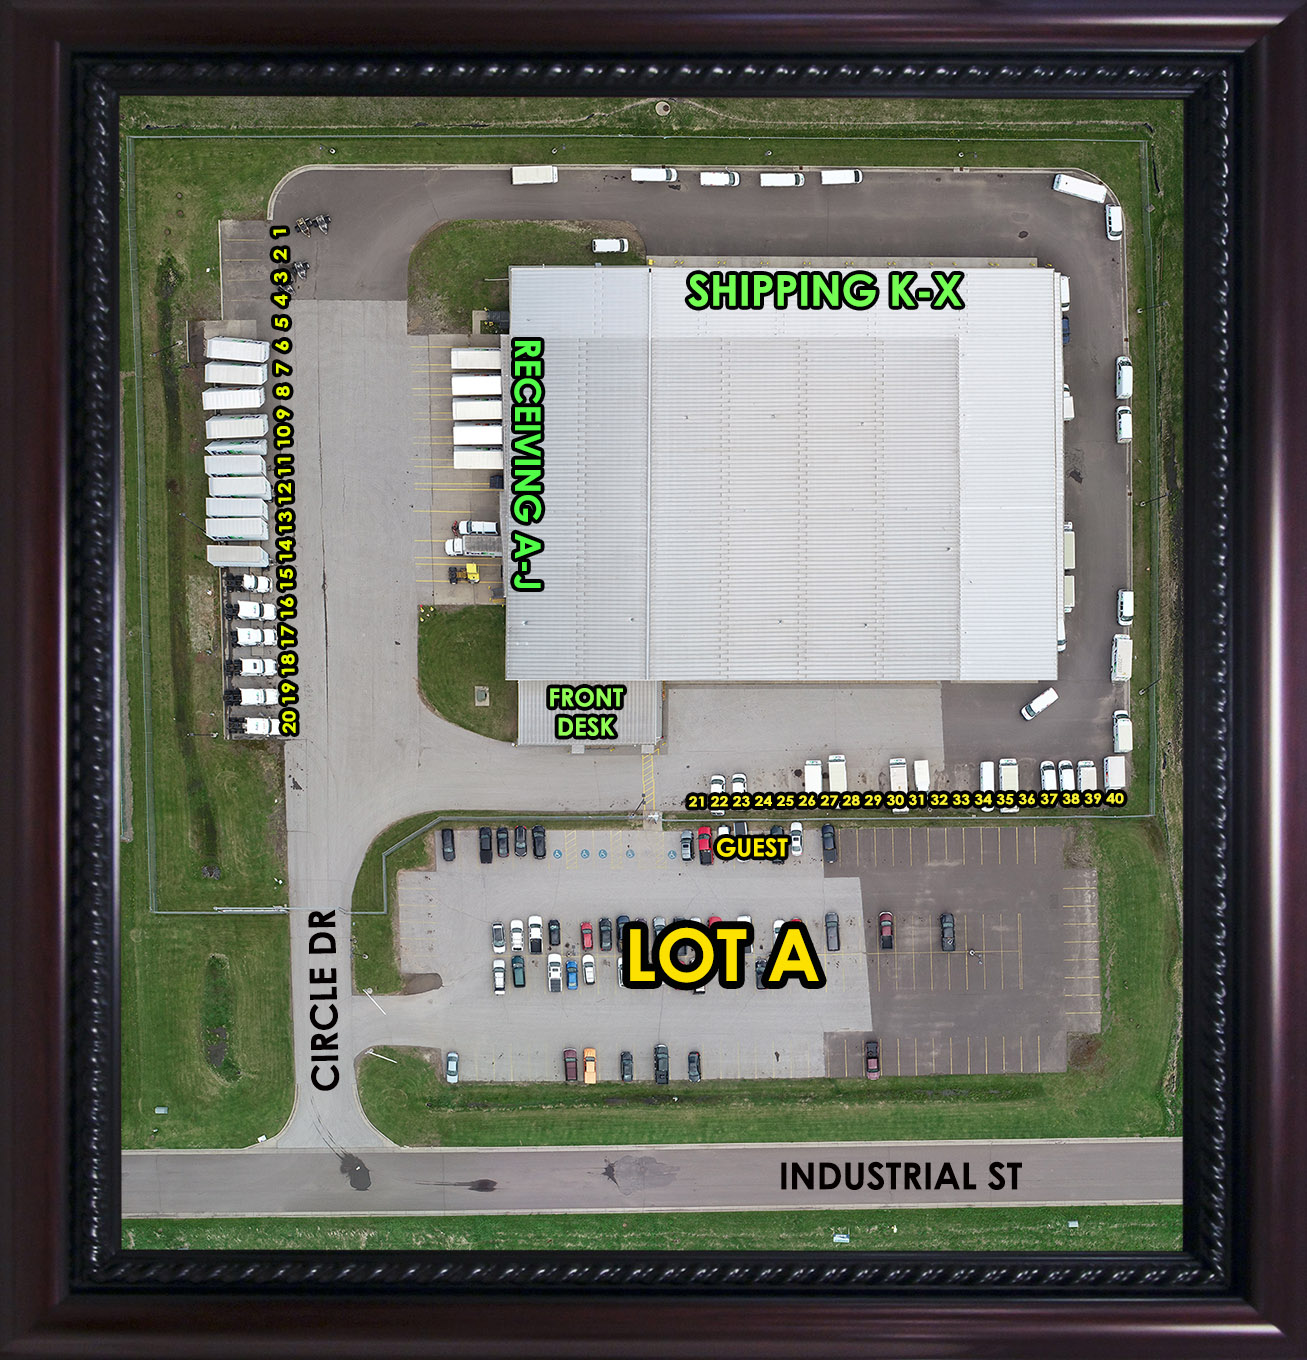 display image of warehouse overhead view